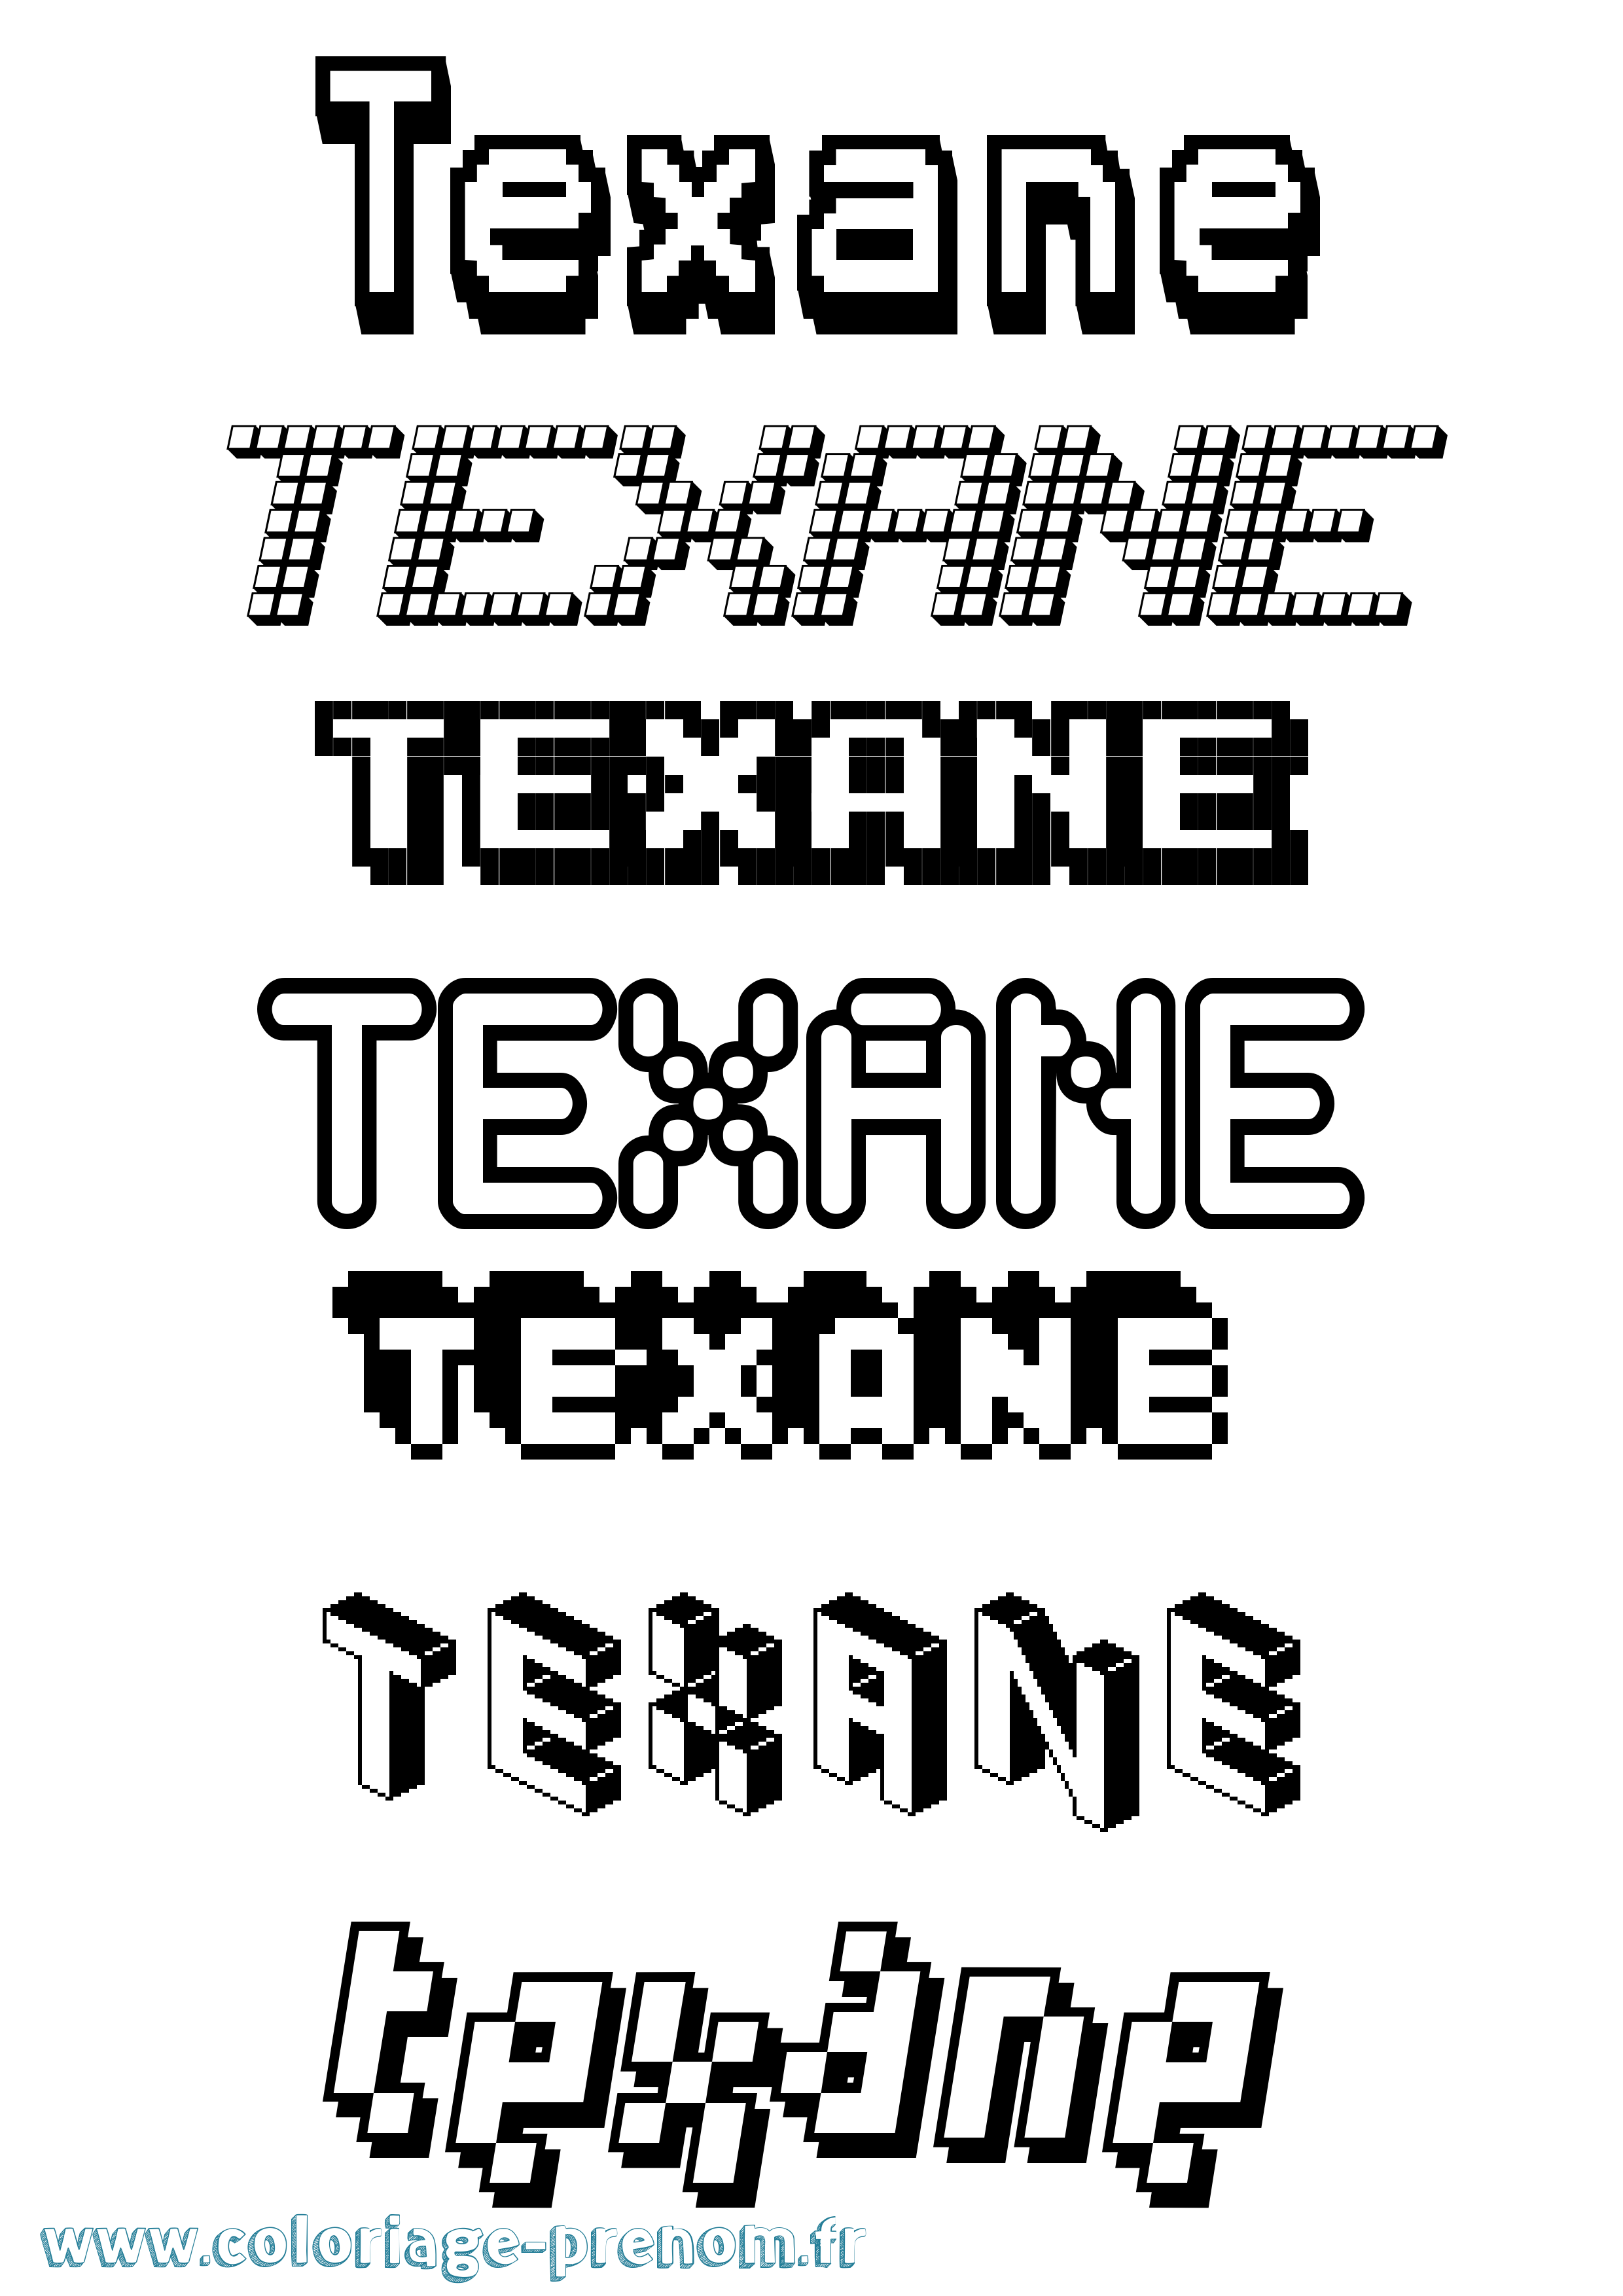 Coloriage prénom Texane Pixel